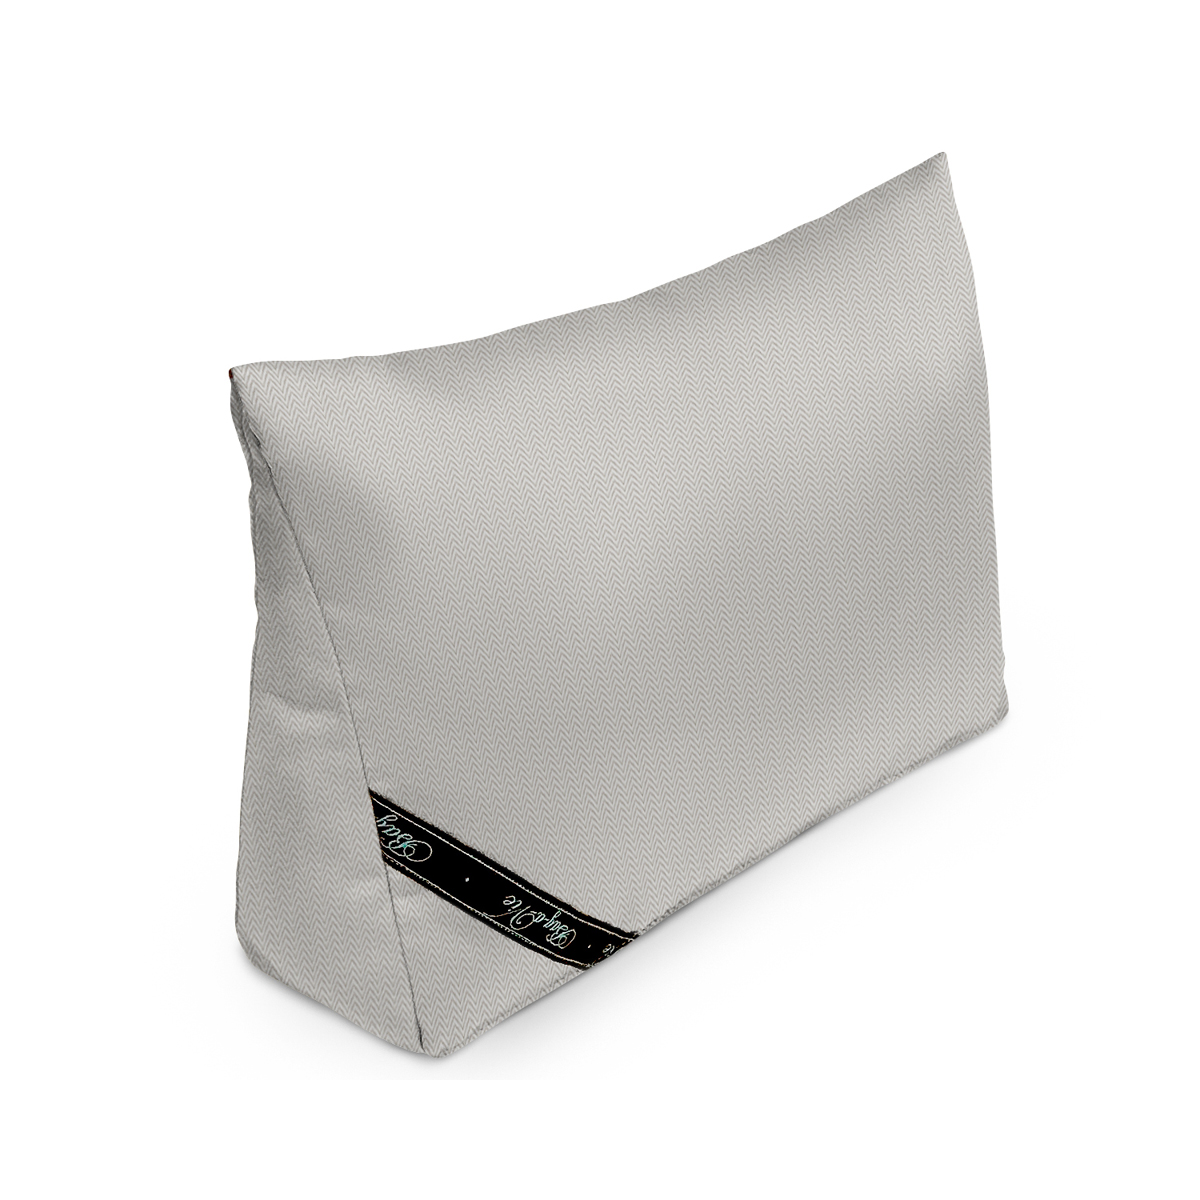 Bag-a-Vie Purse Shaper Pillow Insert - Champagne - Luxury Handbag Shaper  Insert for Women's Purses -…See more Bag-a-Vie Purse Shaper Pillow Insert 